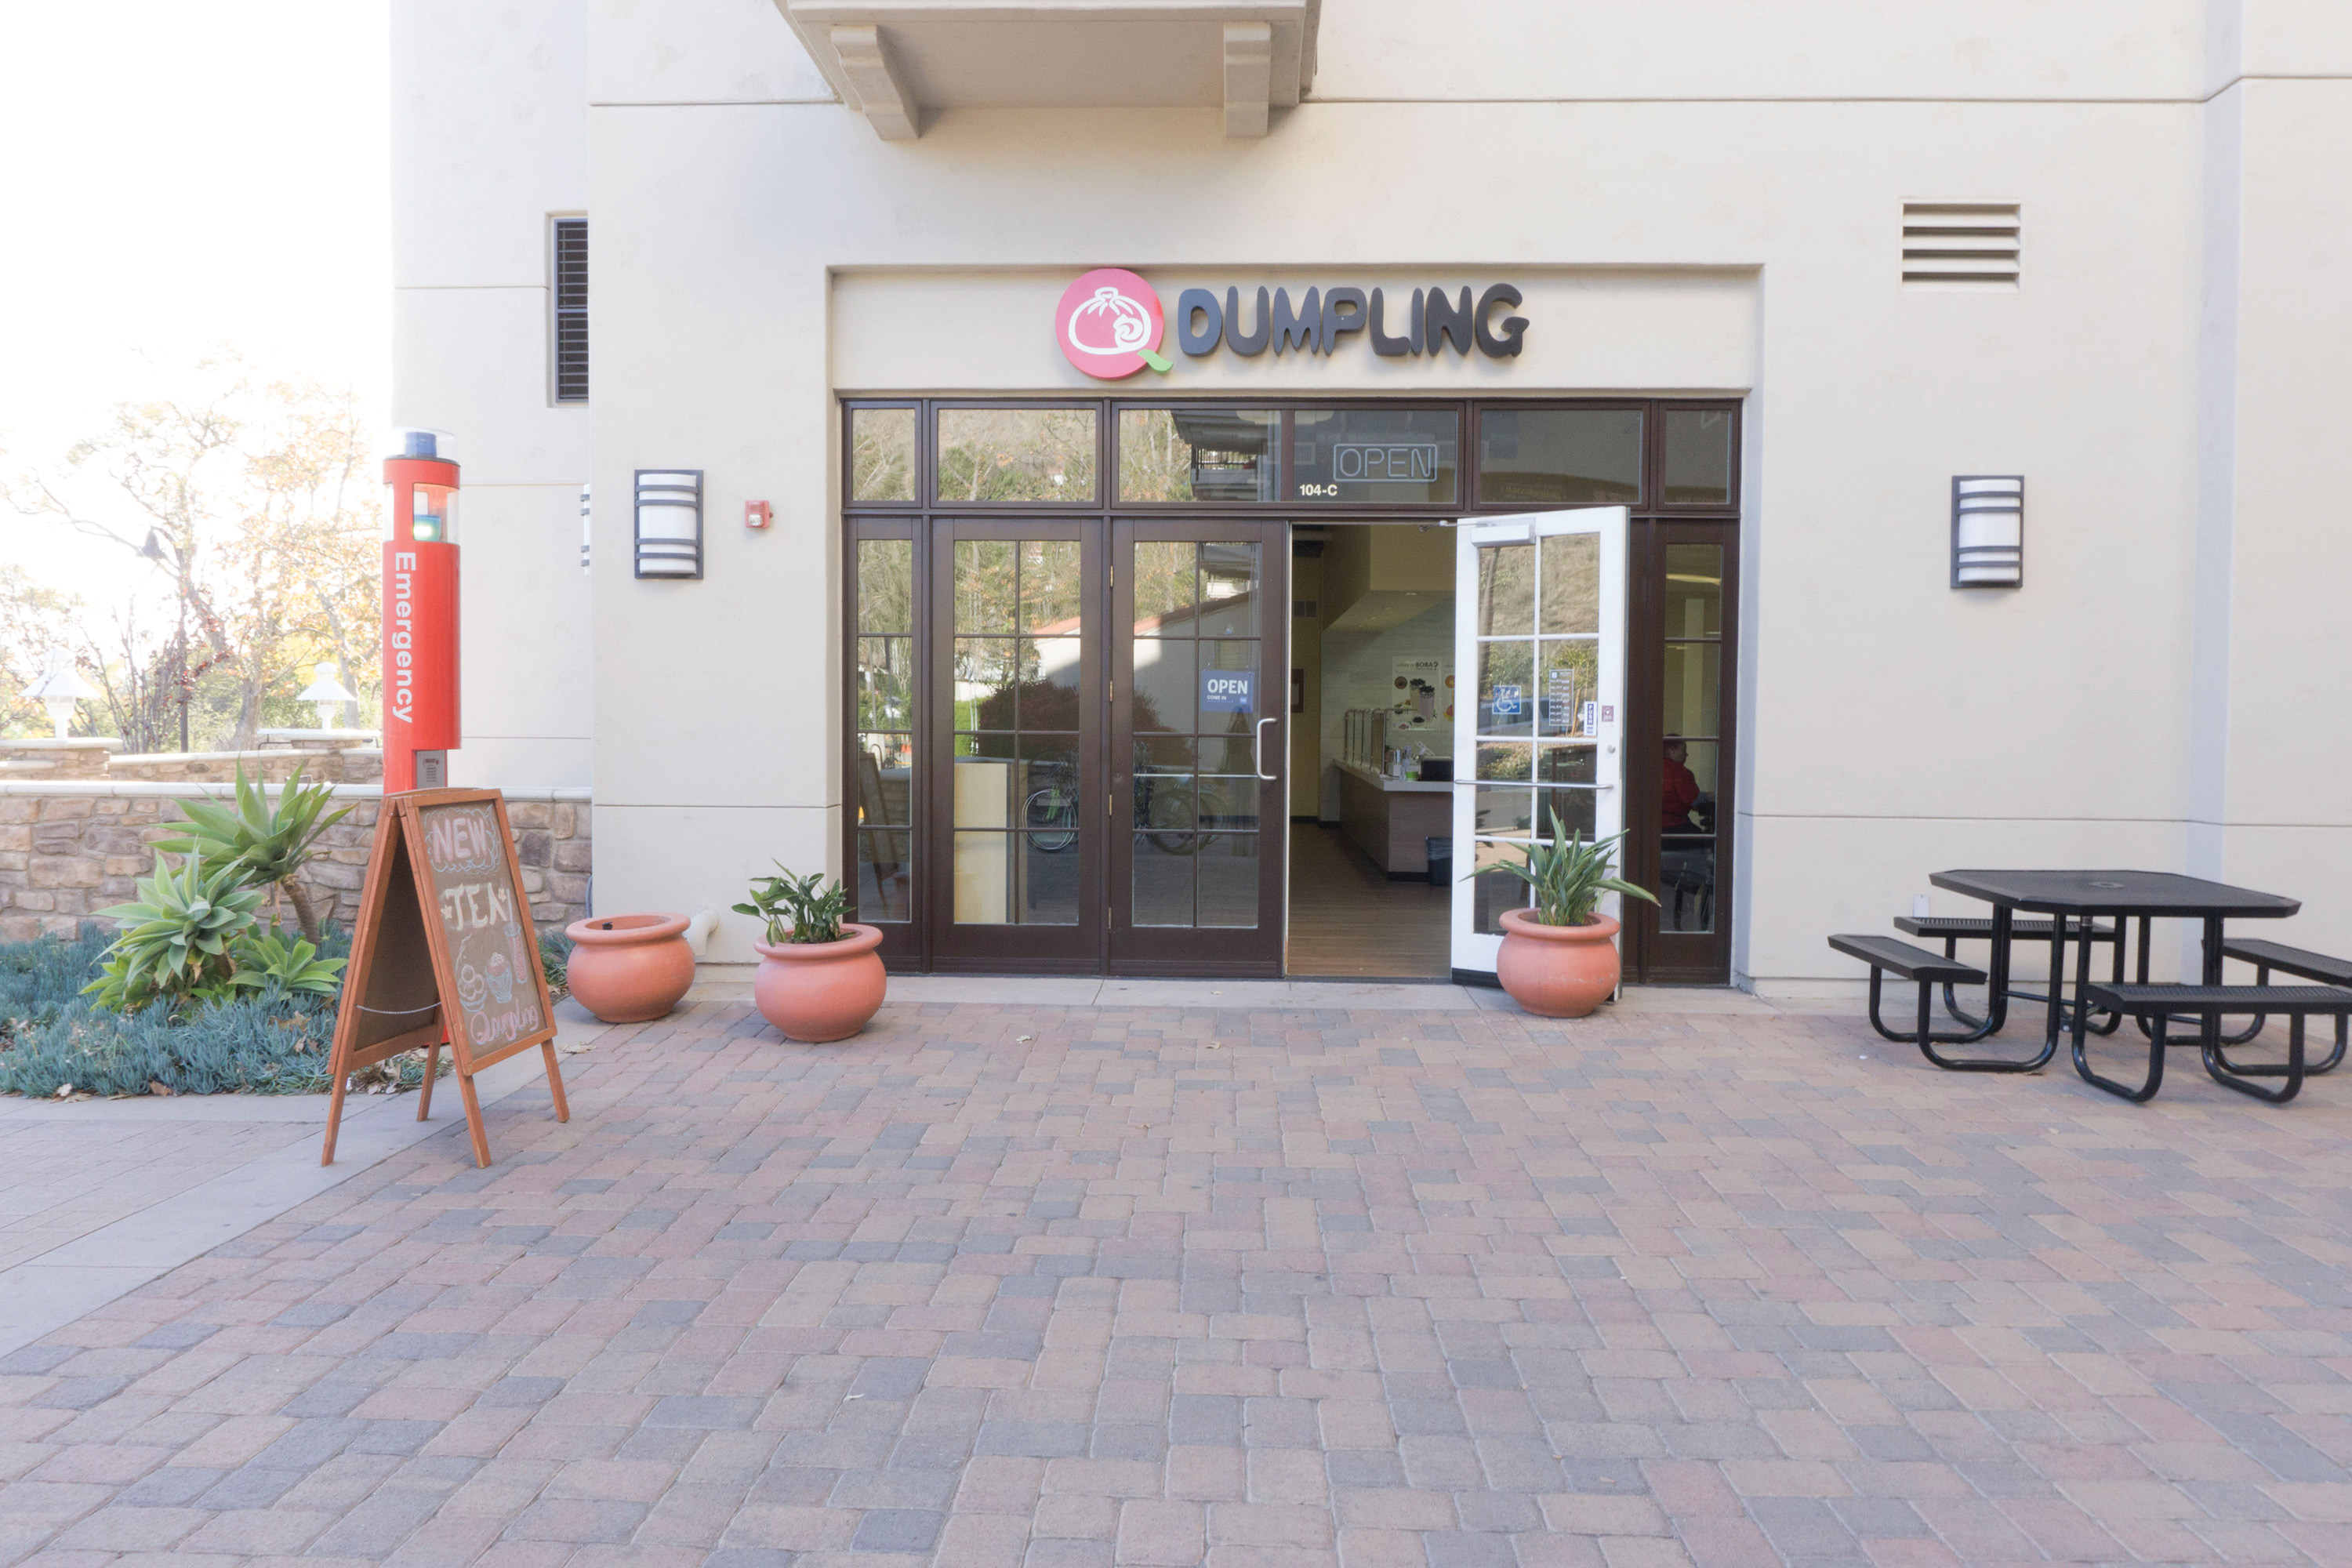 Restaurant review: Q Dumpling